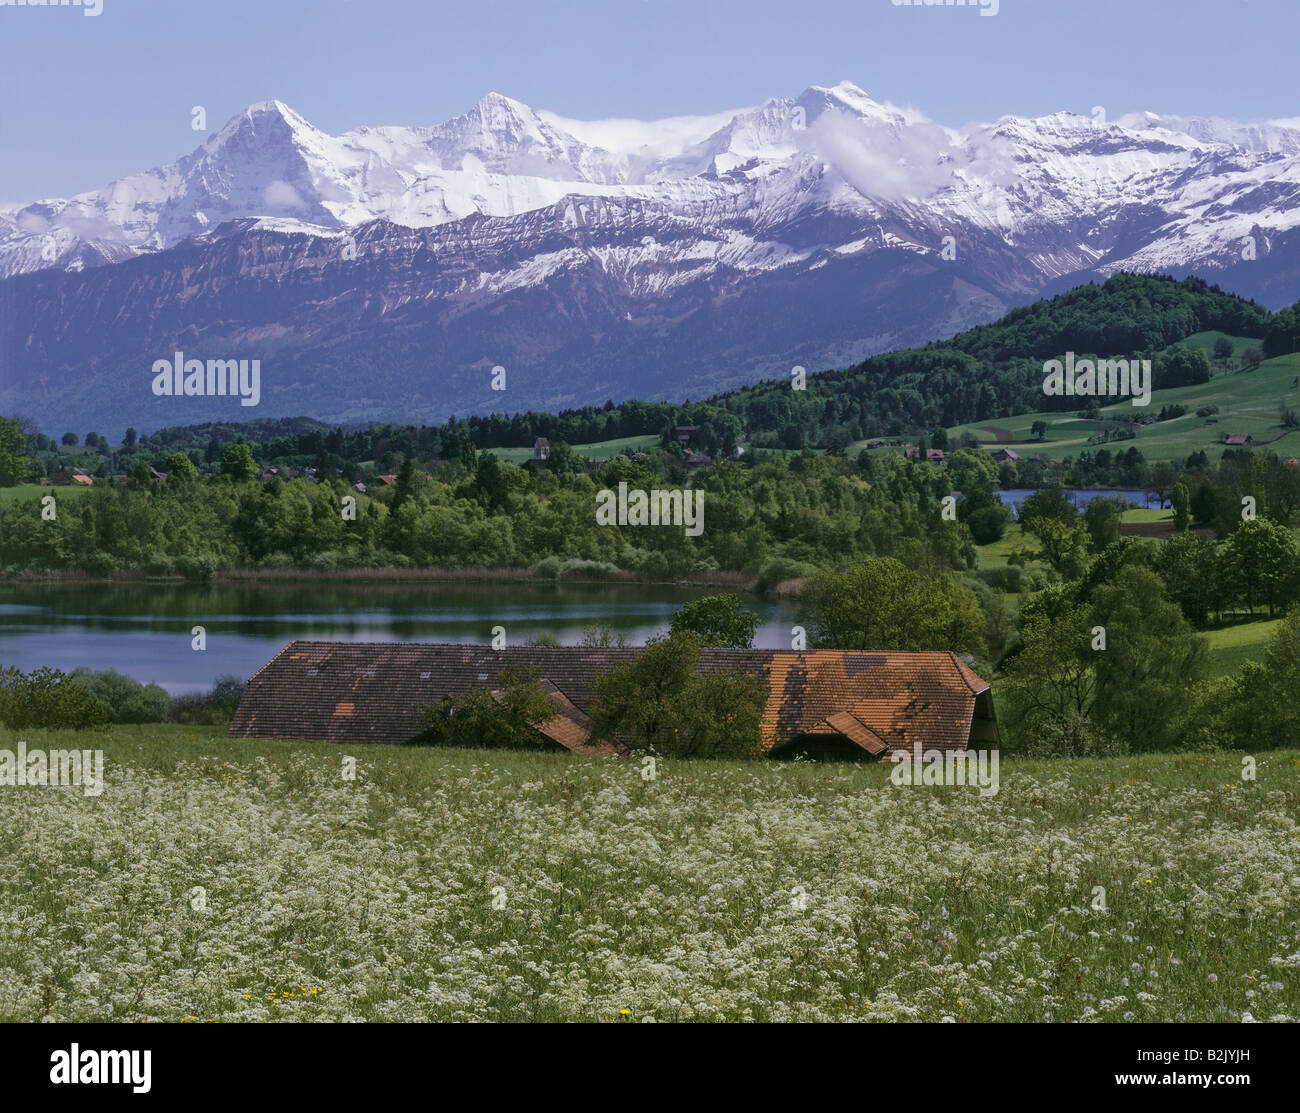 Geographie/Reisen, Schweiz, Bern, Landschaften, Additional-Rights - Clearance-Info - Not-Available Stockfoto